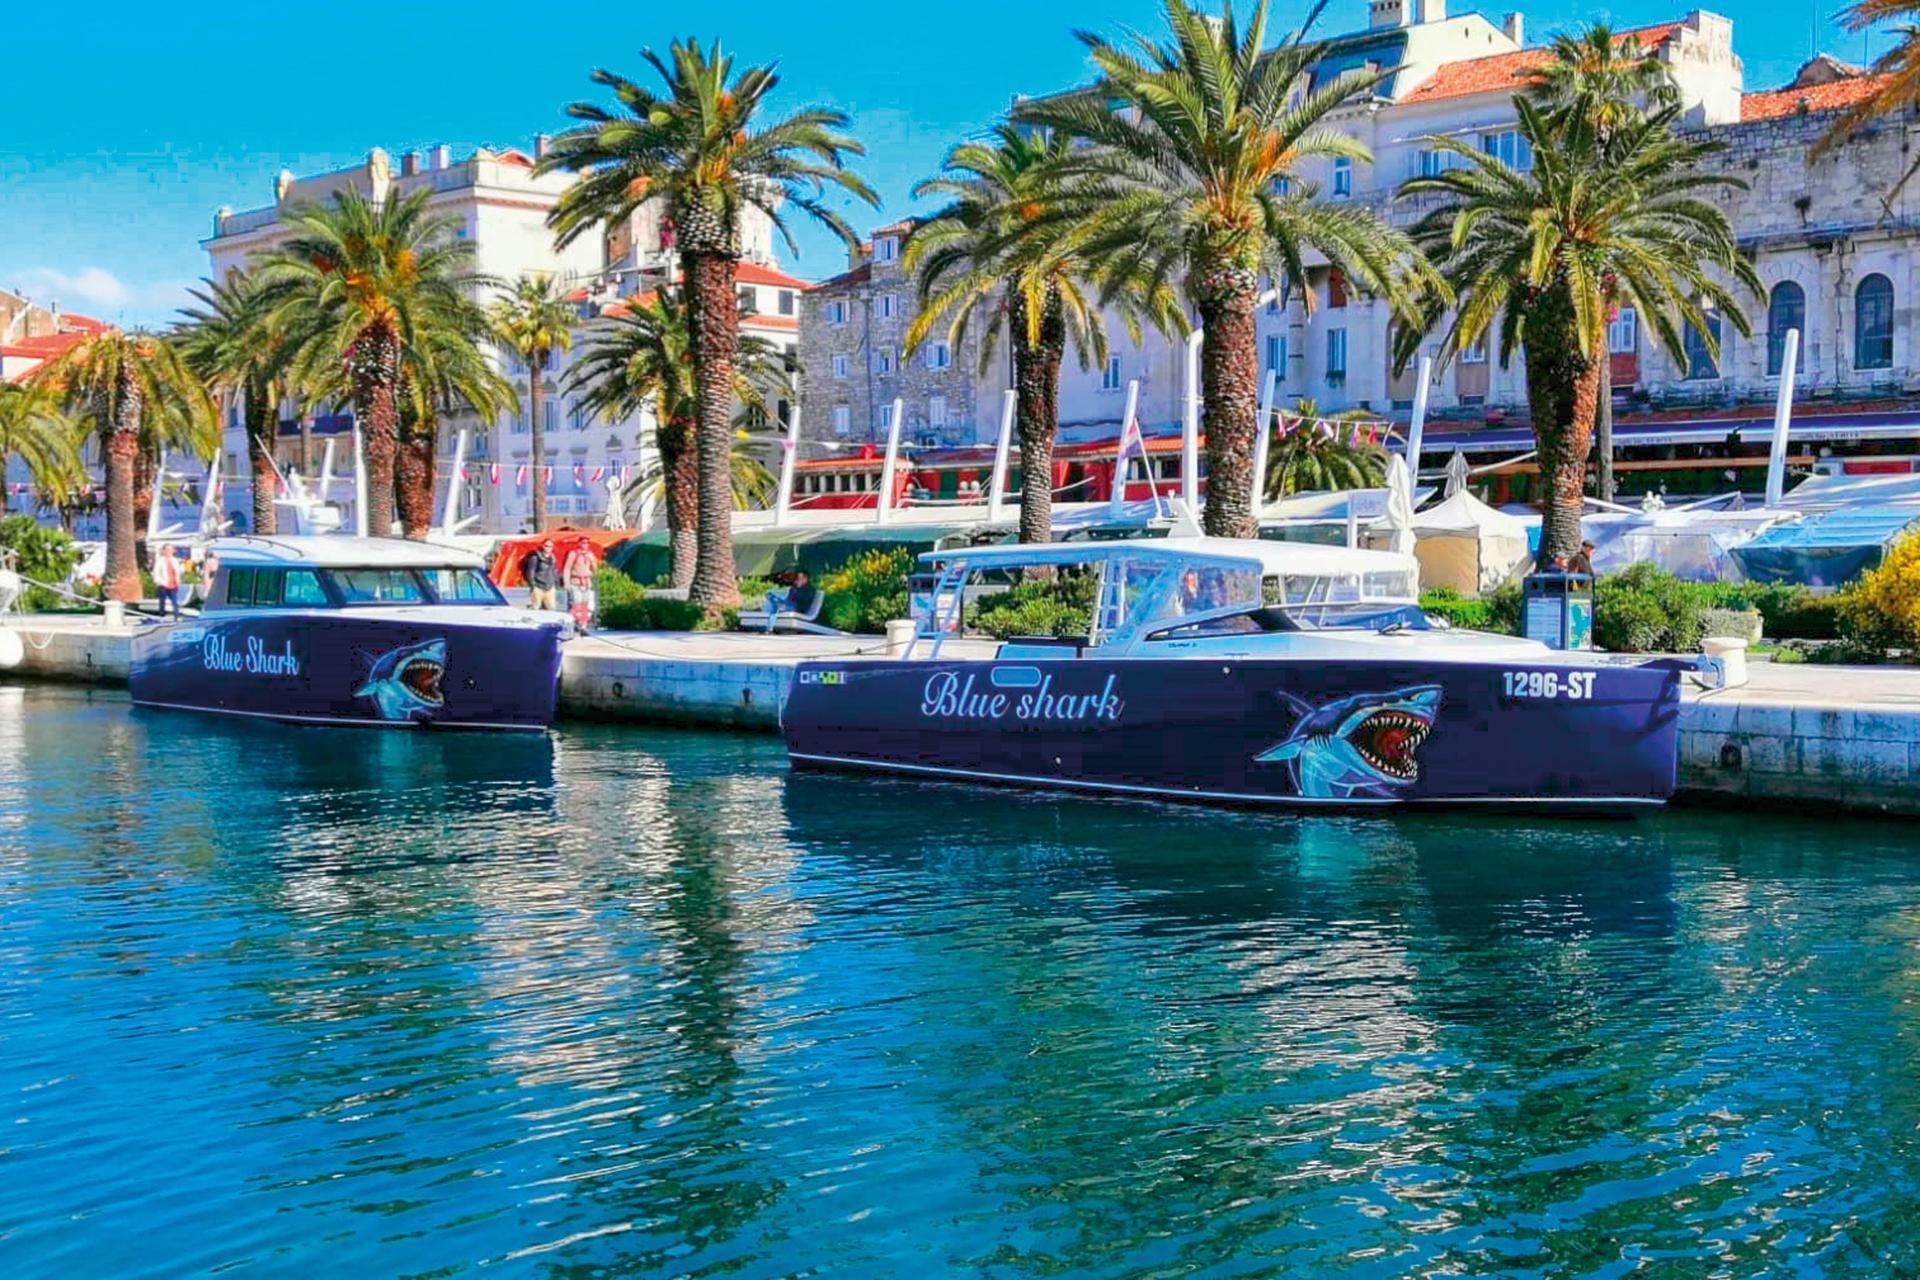 Blue Shark Boat Tours & Transfers boats on famous Split Riva